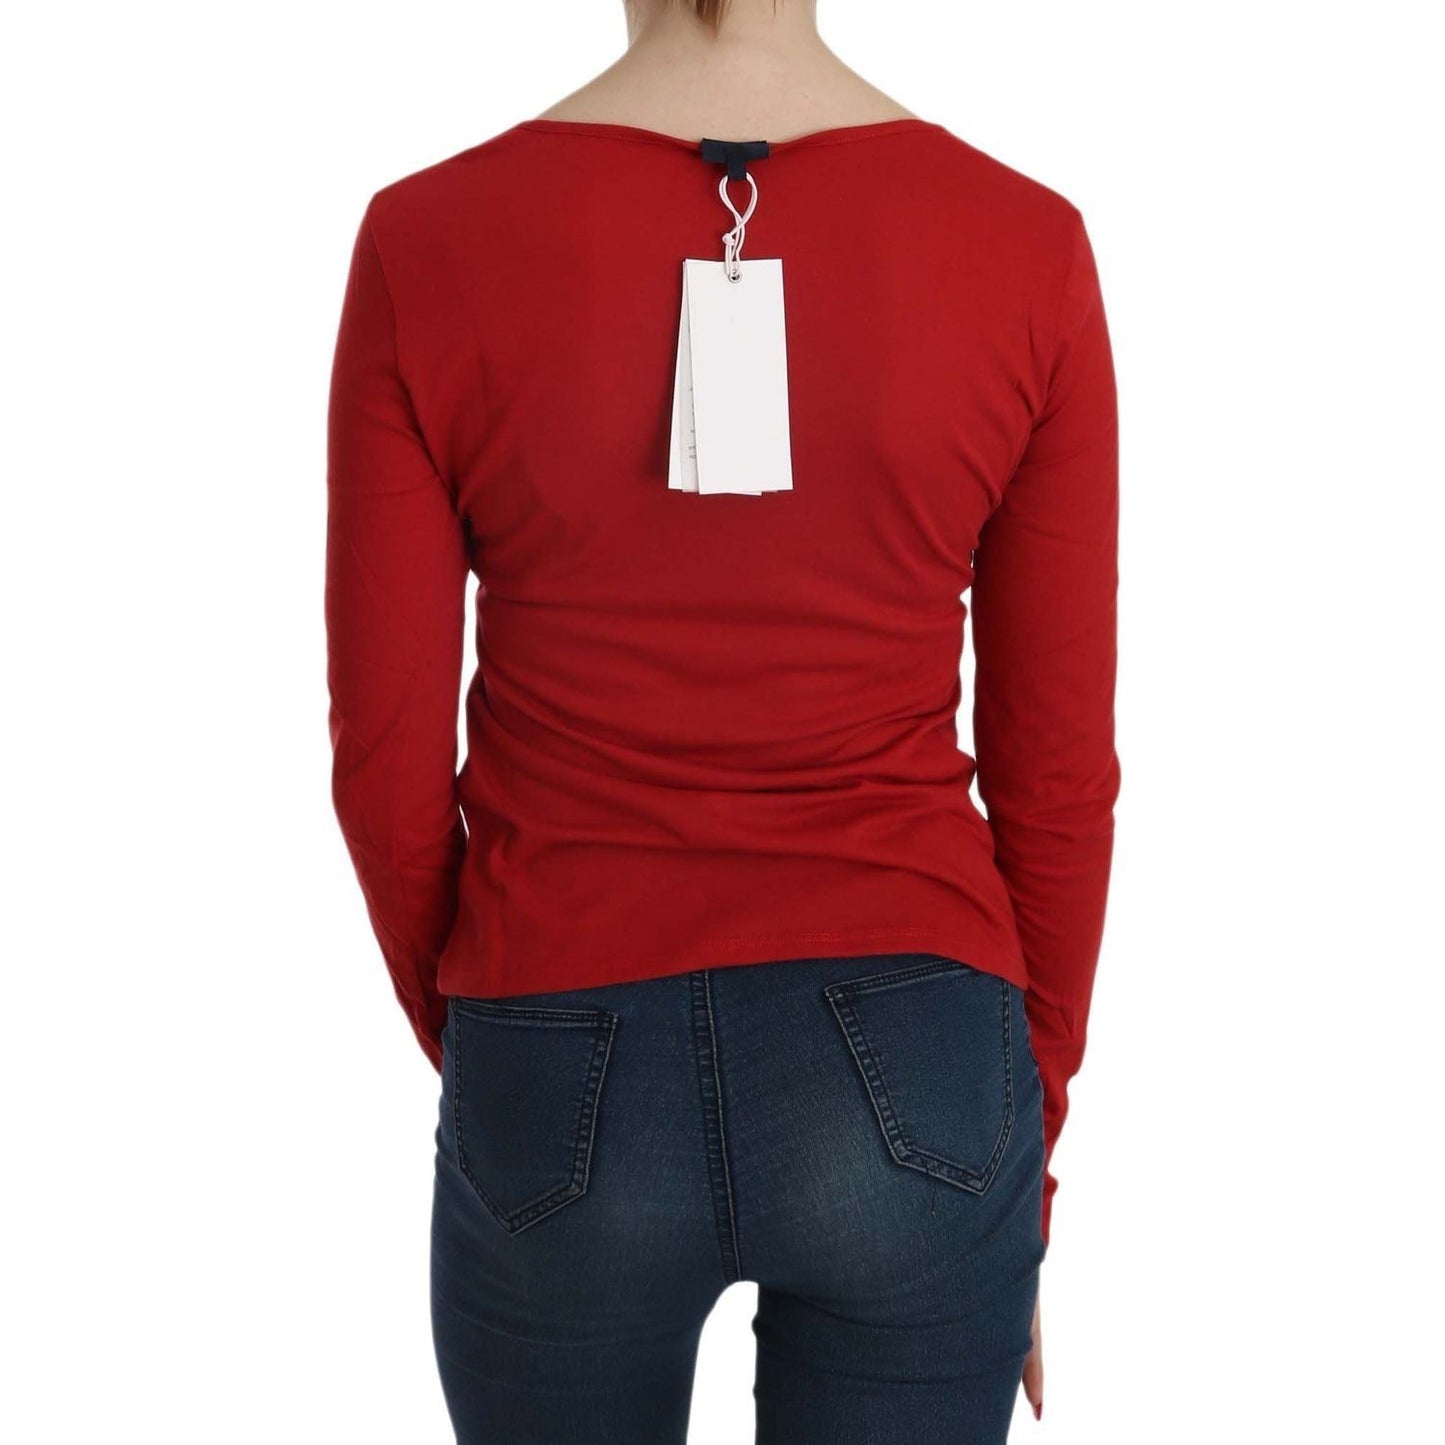 Exte Ravishing Red Crystal Embellished Blouse red-crystal-embellished-long-sleeve-blouse